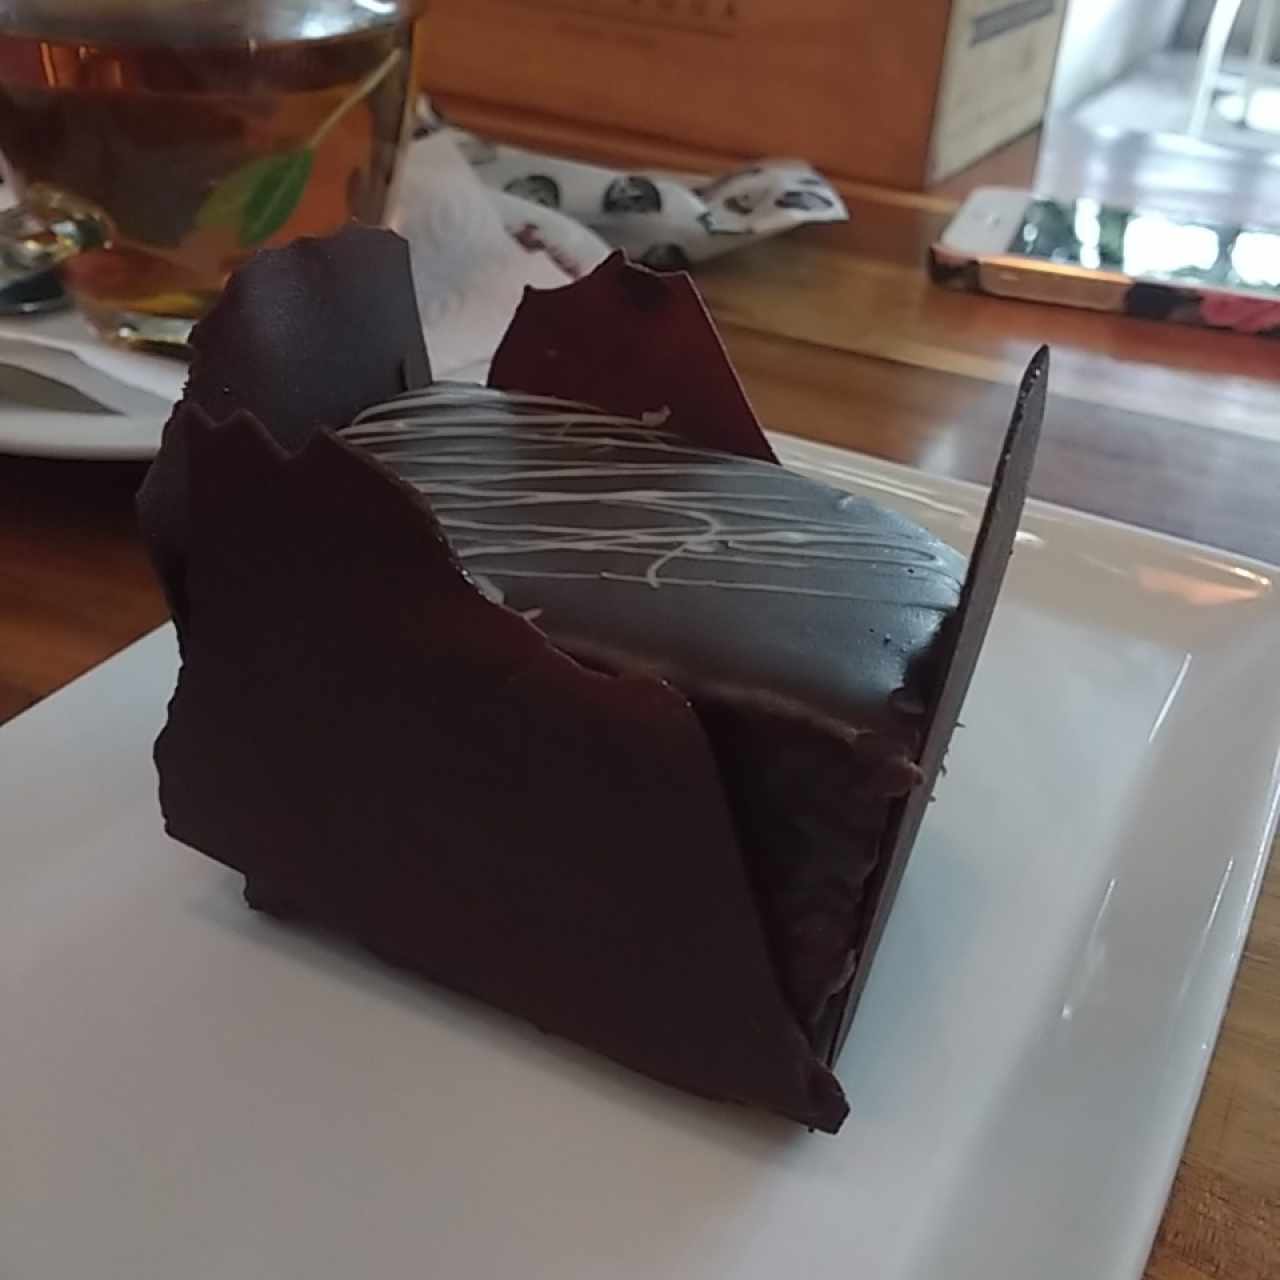 torta de chocolate y arequipe